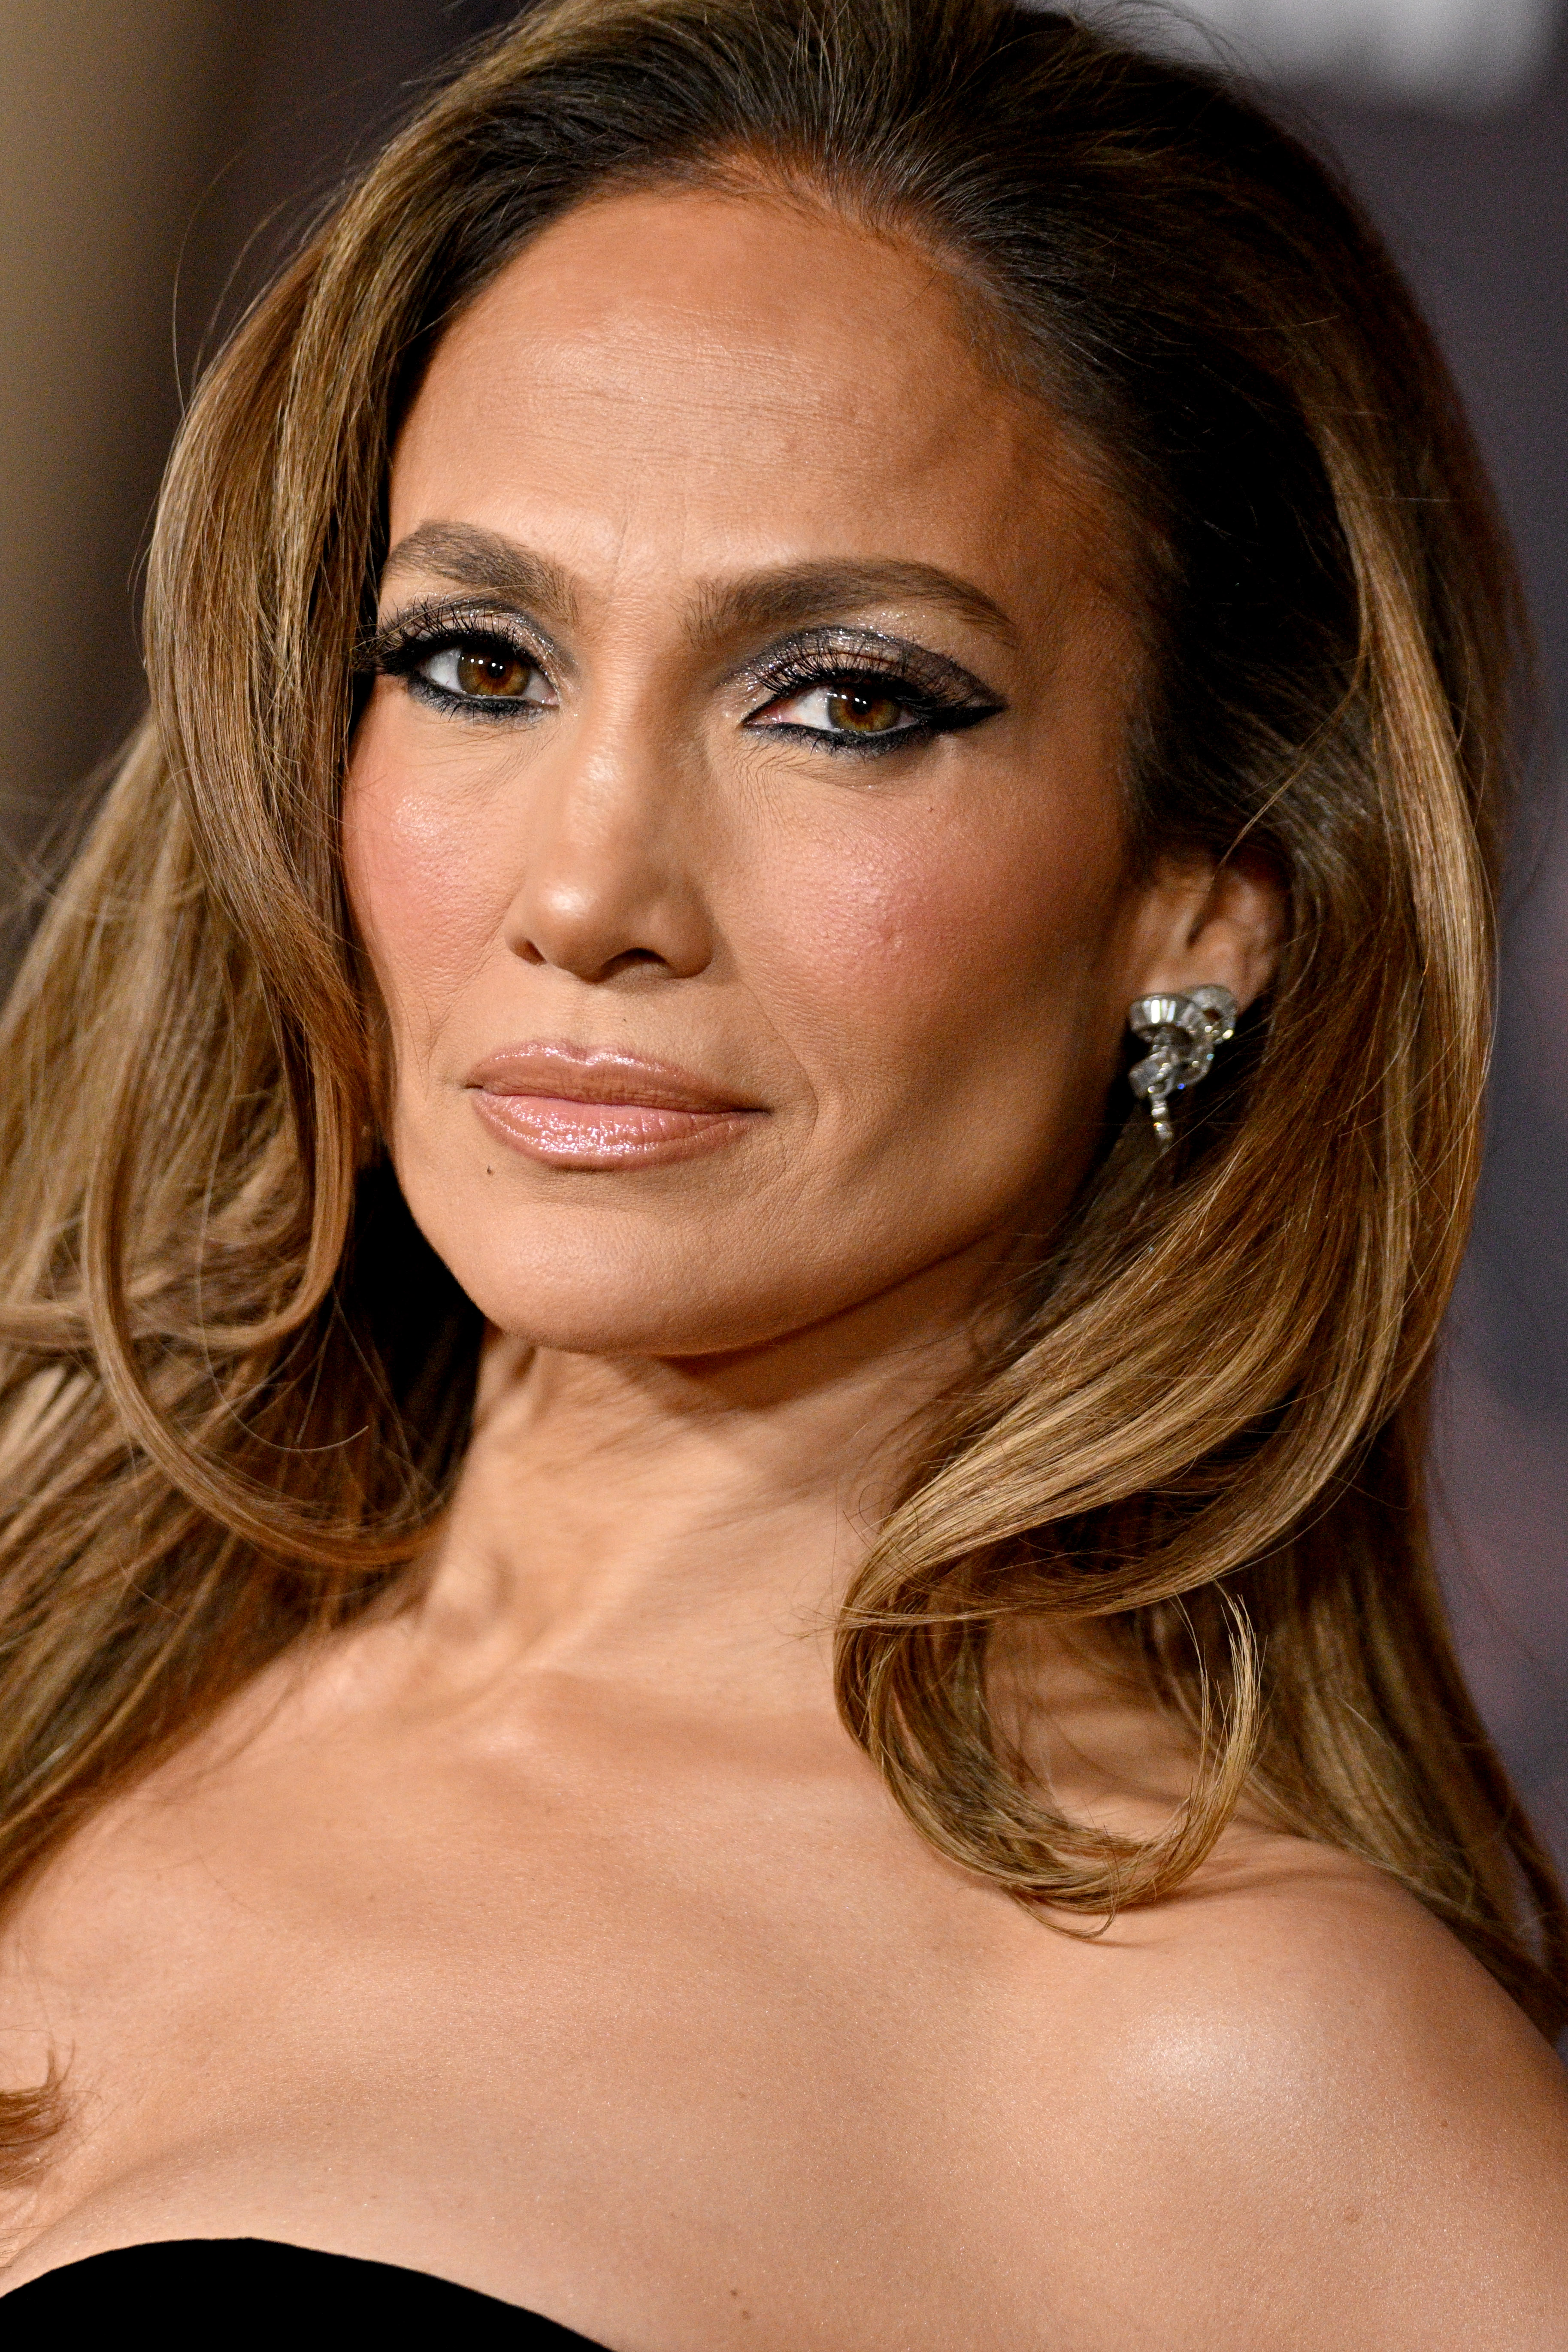 Jennifer Lopez besucht die Premiere von "This Is Me...Now: A Love Story" in Hollywood, Kalifornien, am 13. Februar 2024. | Quelle: Getty Images